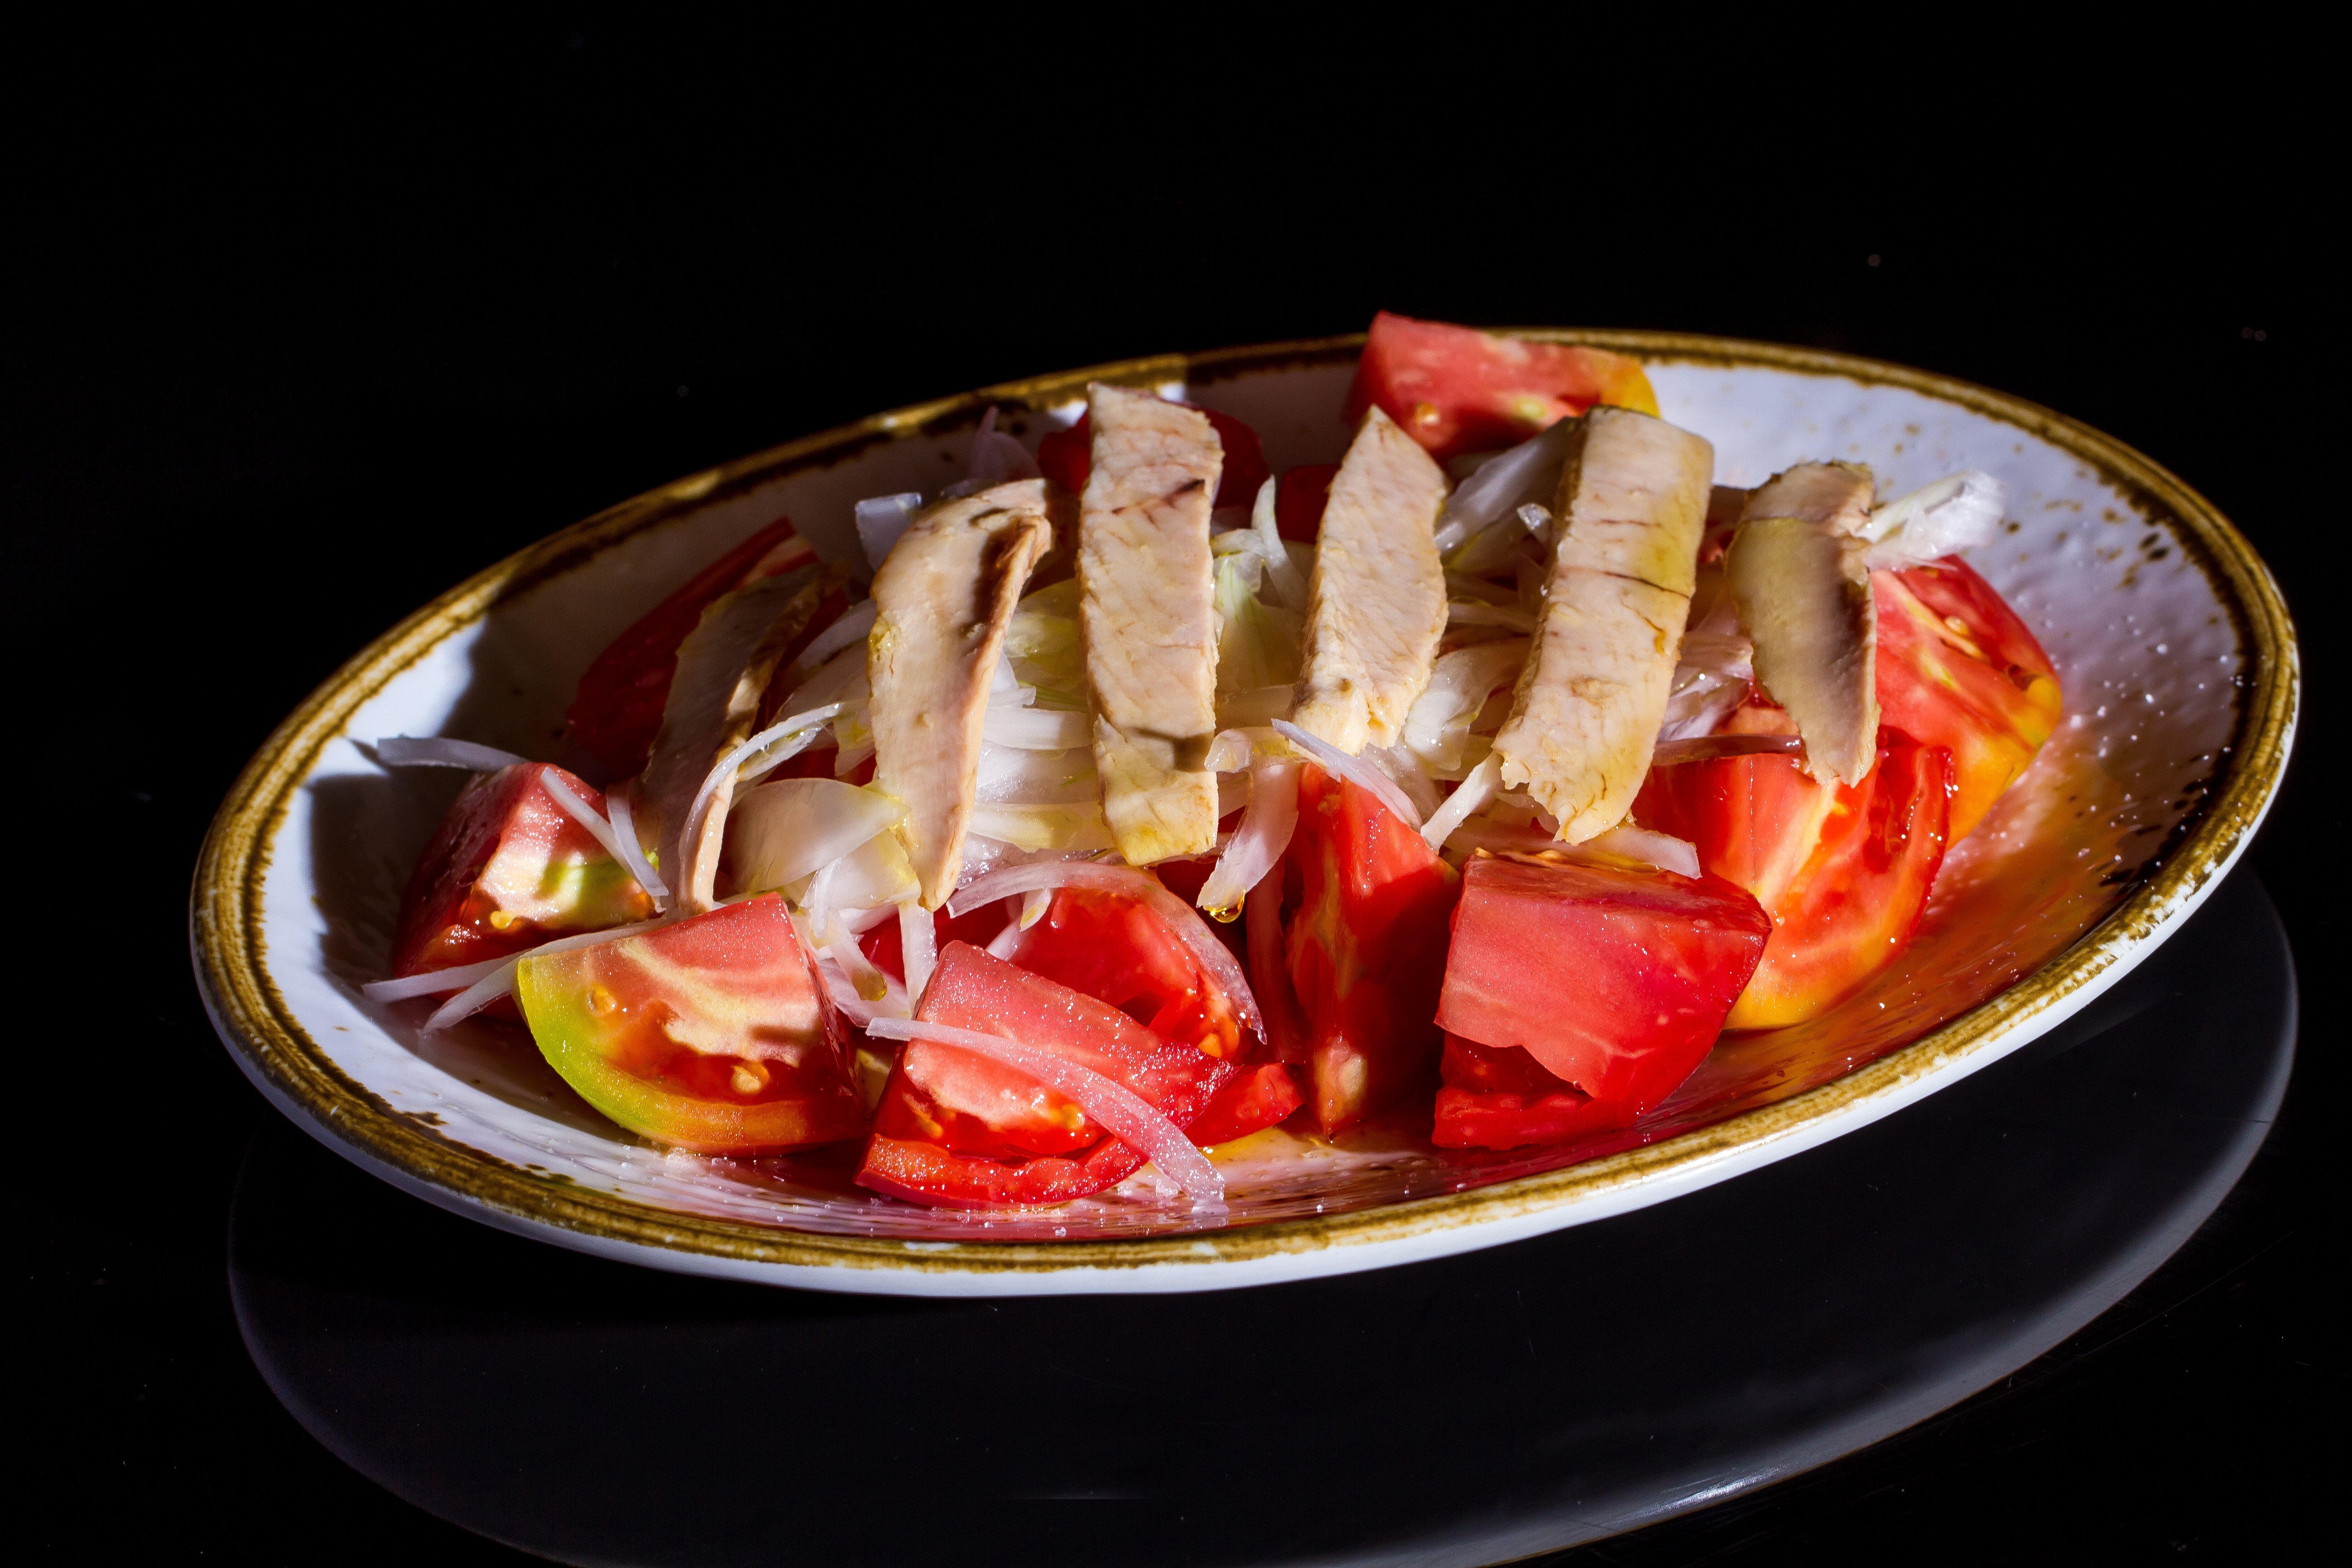 Tomato salad with tuna belly & onion